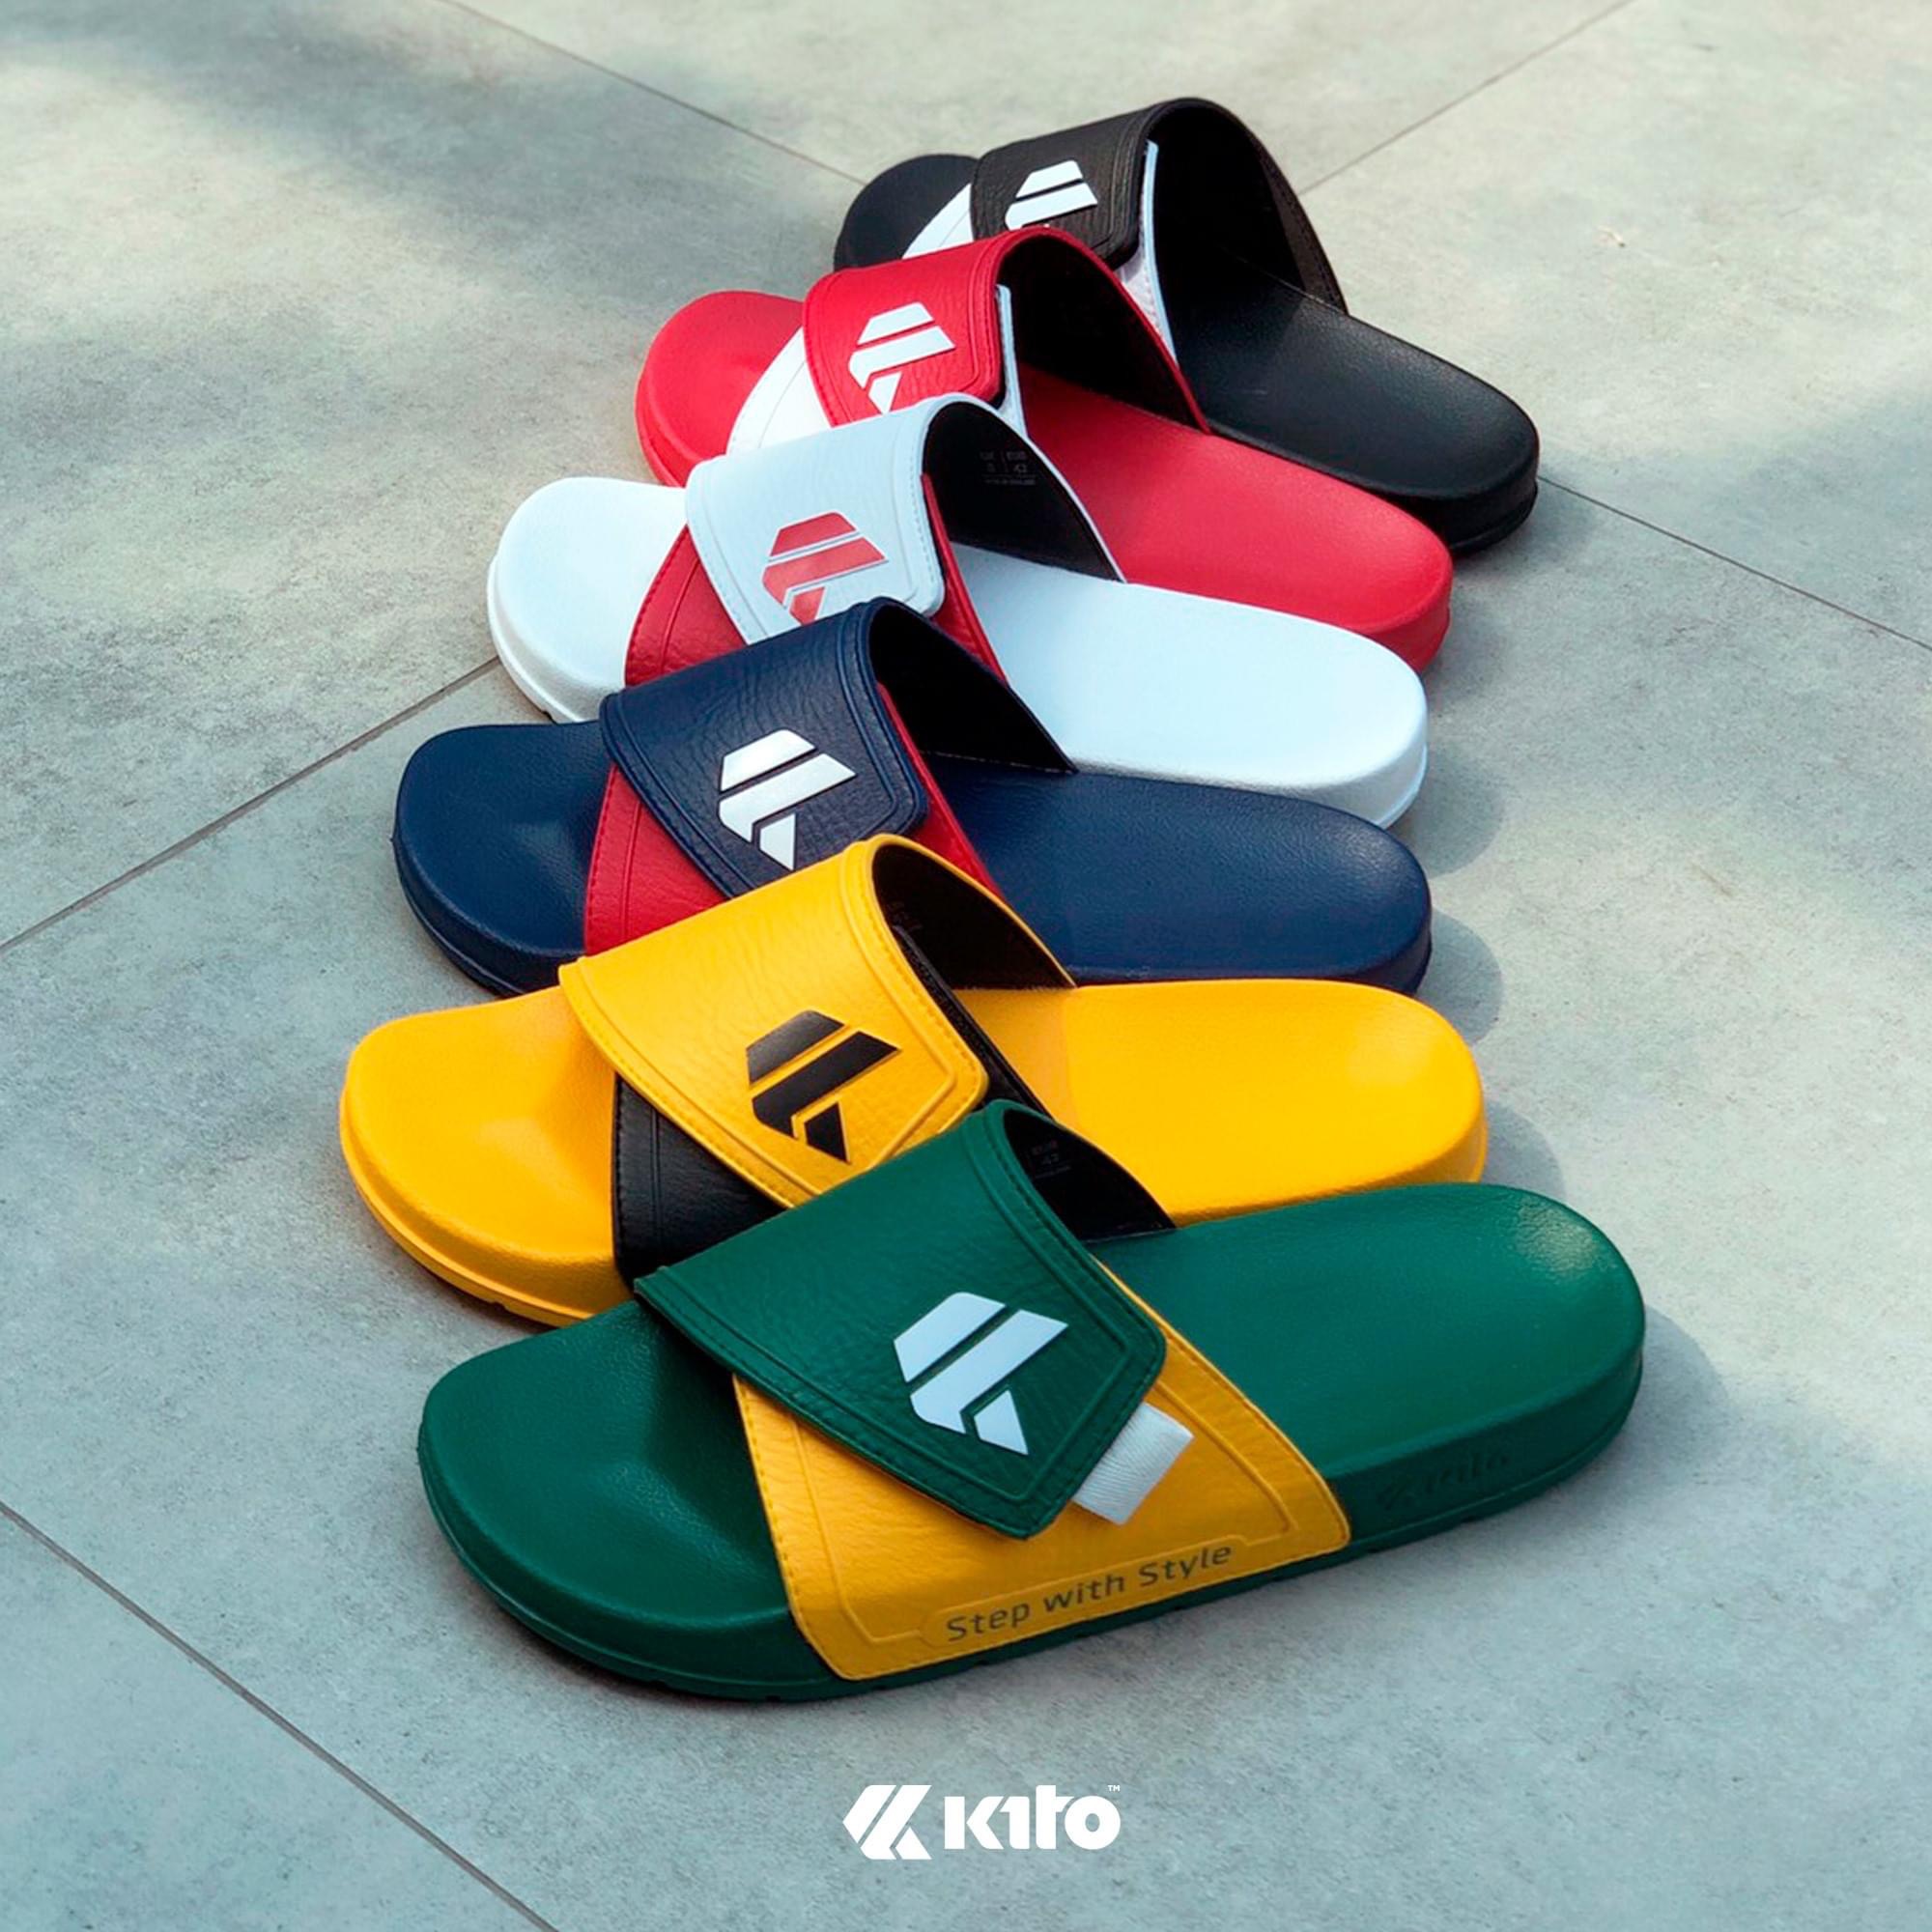 ⚡️ใหม่ล่าสุด⚡️ Kito AH92 - ส่งฟรี❗️ ของแท้ มีป้ายลิขสิทธิ์ และกล่องกีโต้ รองเท้าแตะ กีโต้ Size 36-43